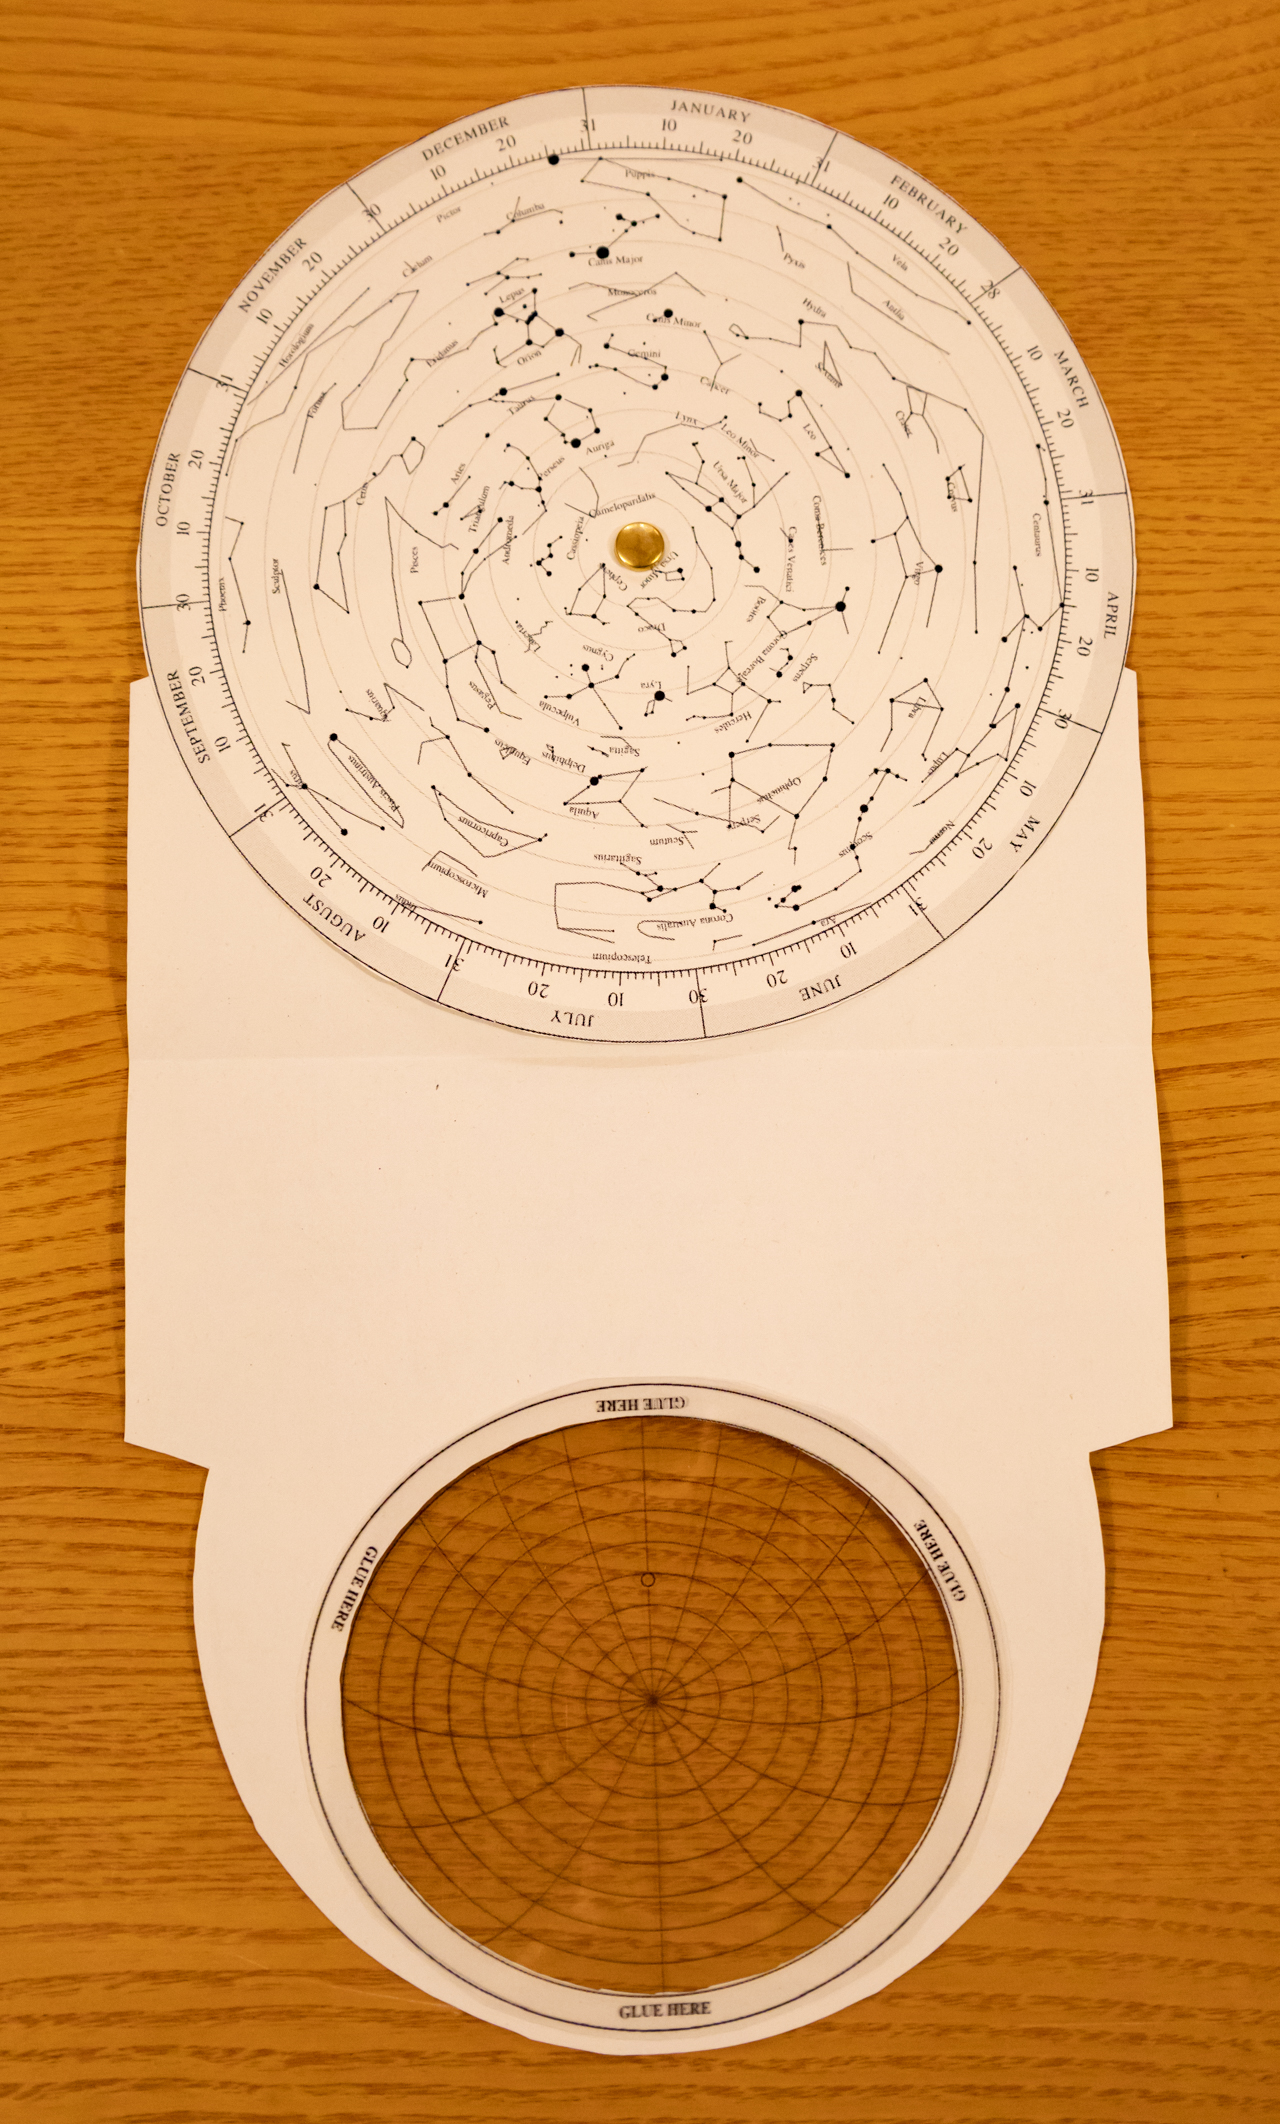 A cardboard planisphere